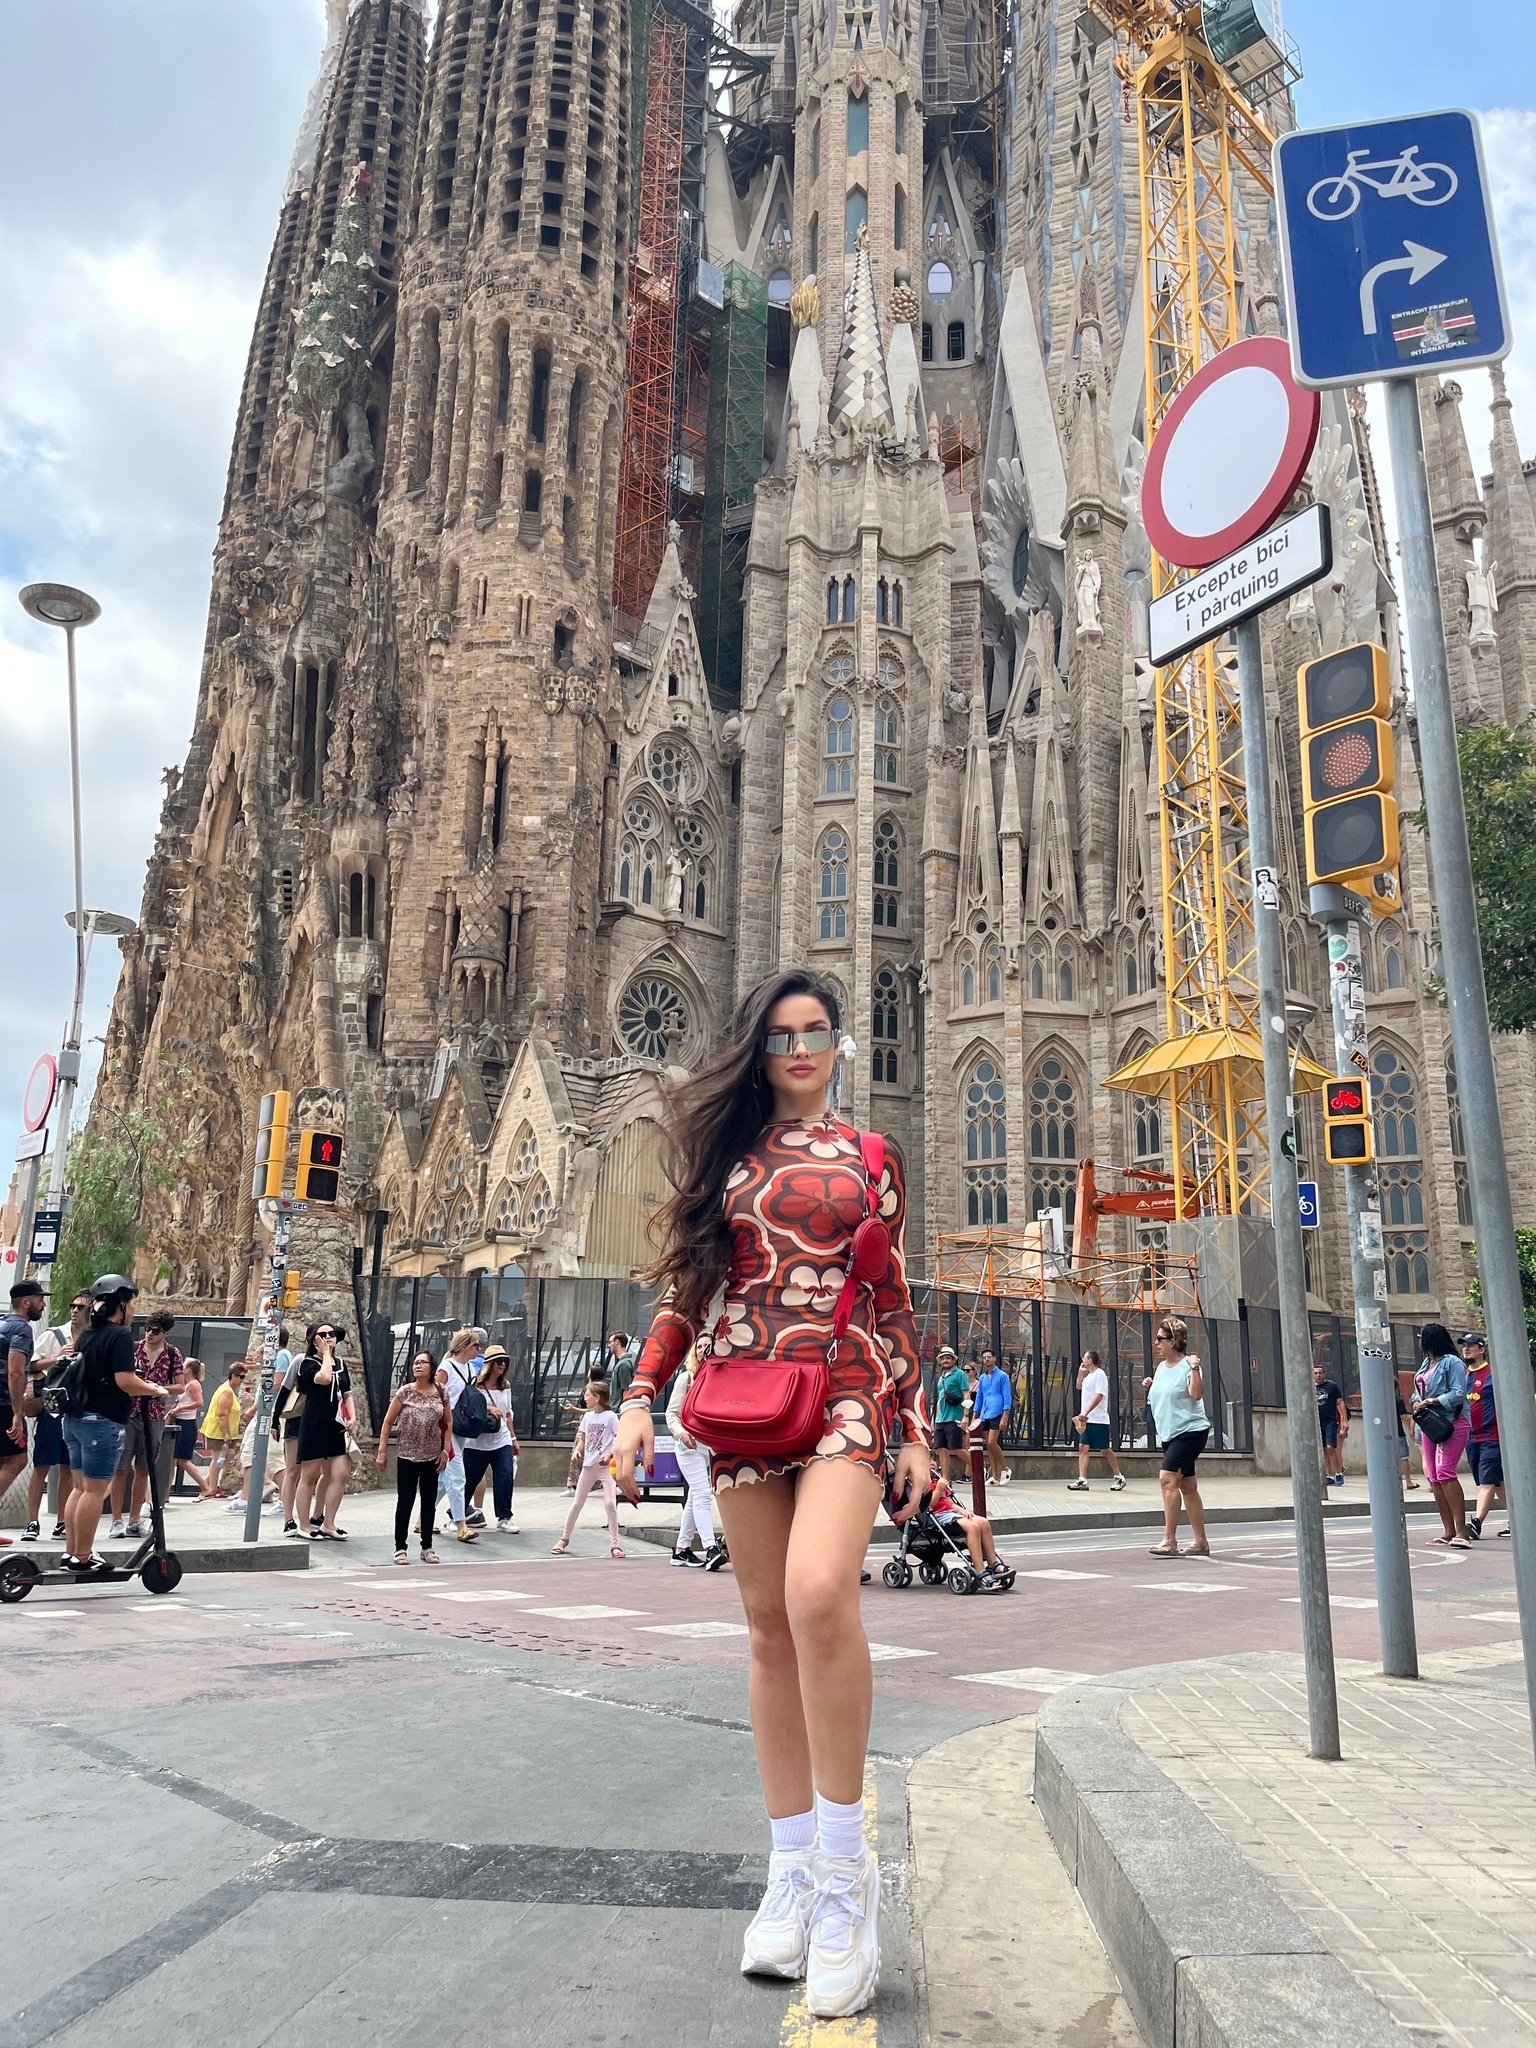 Juliette passeia em Barcelona (Foto: Reprodução / Twitter)